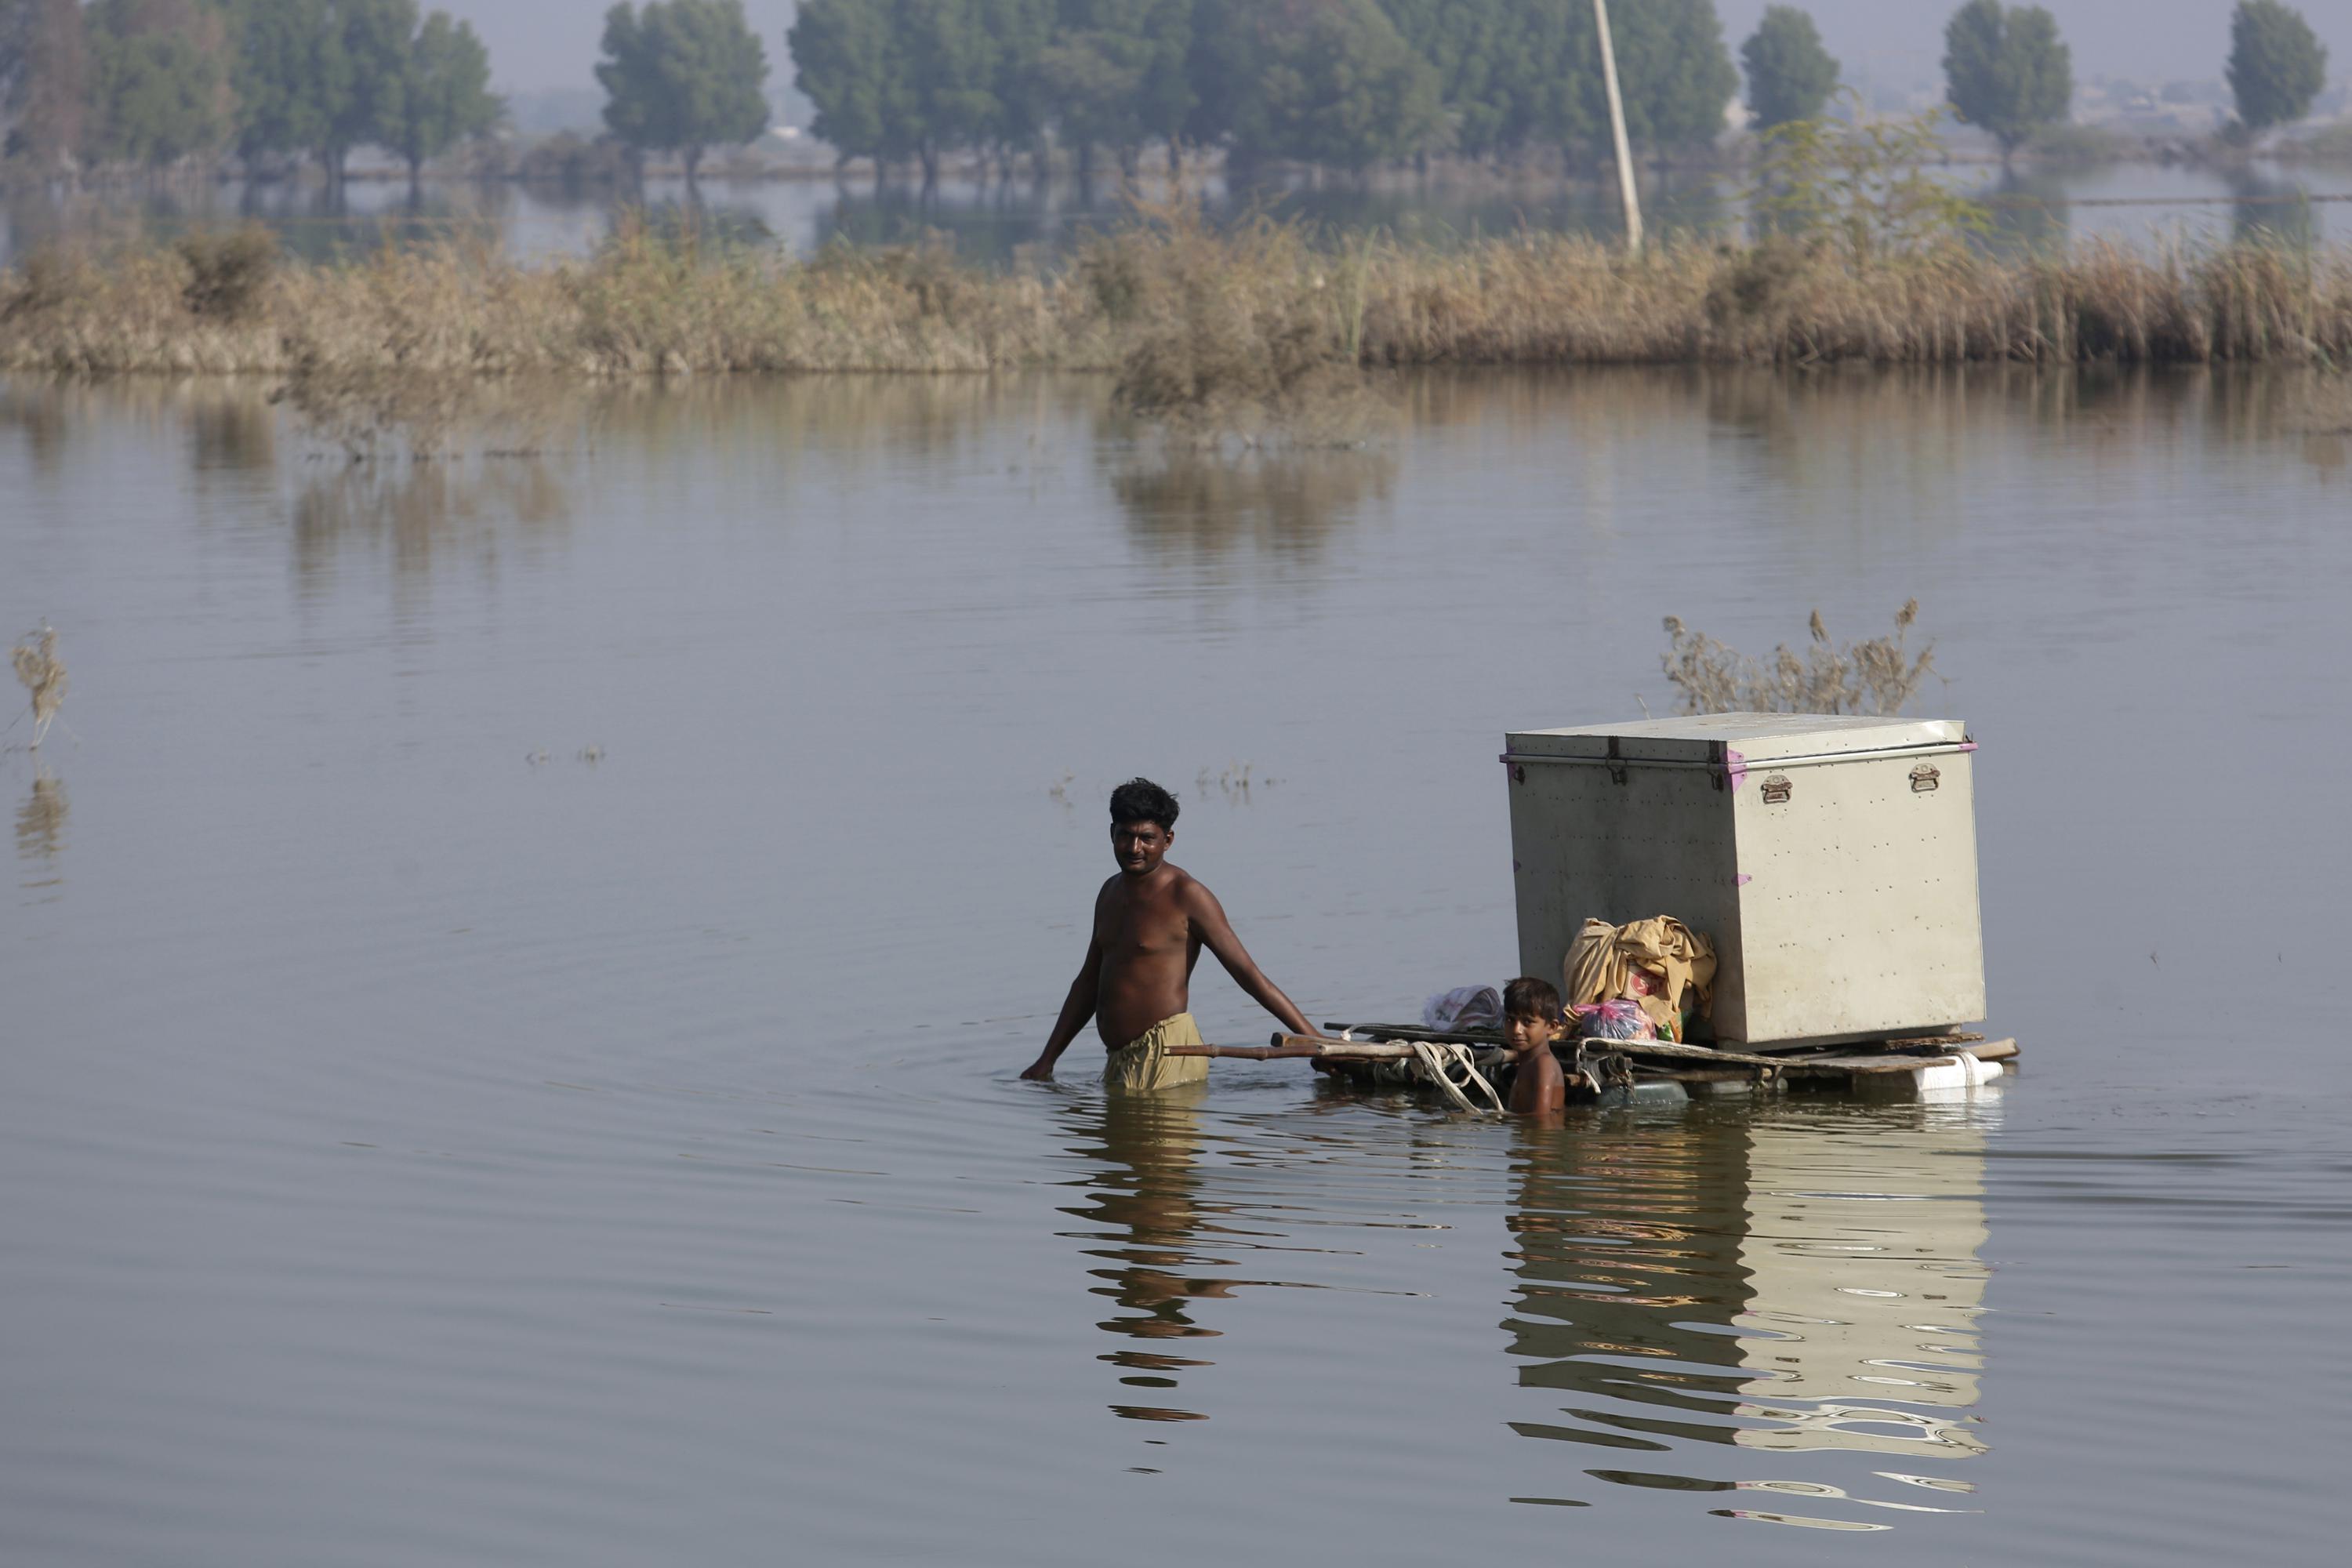 Insurgency, neglect hurt flood relief in Pakistani province - The Associated Press - en Español